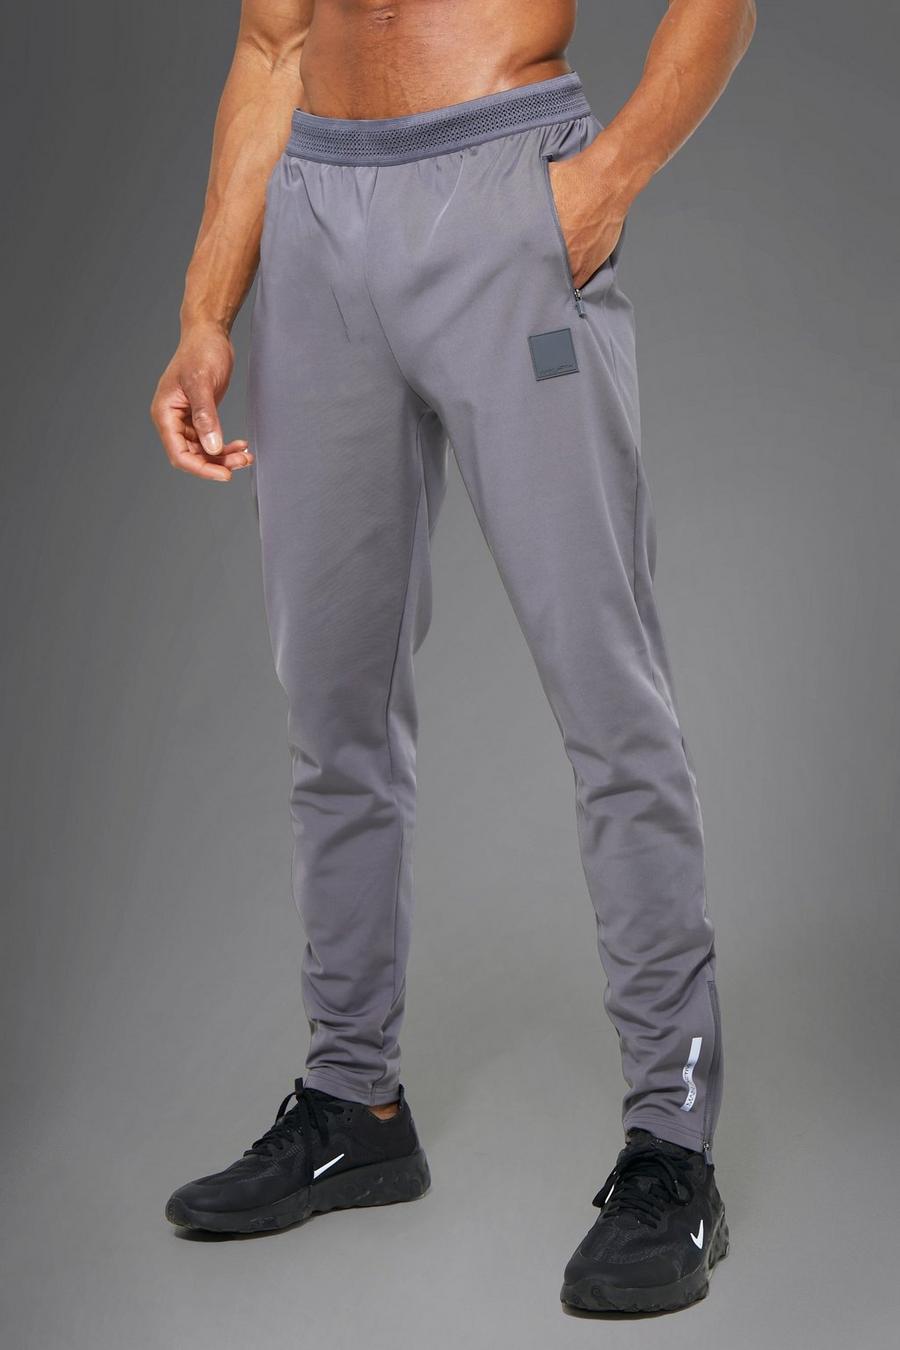 Charcoal grey מכנסי ריצה ספורטיביים לאימונים עם כיתוב Man